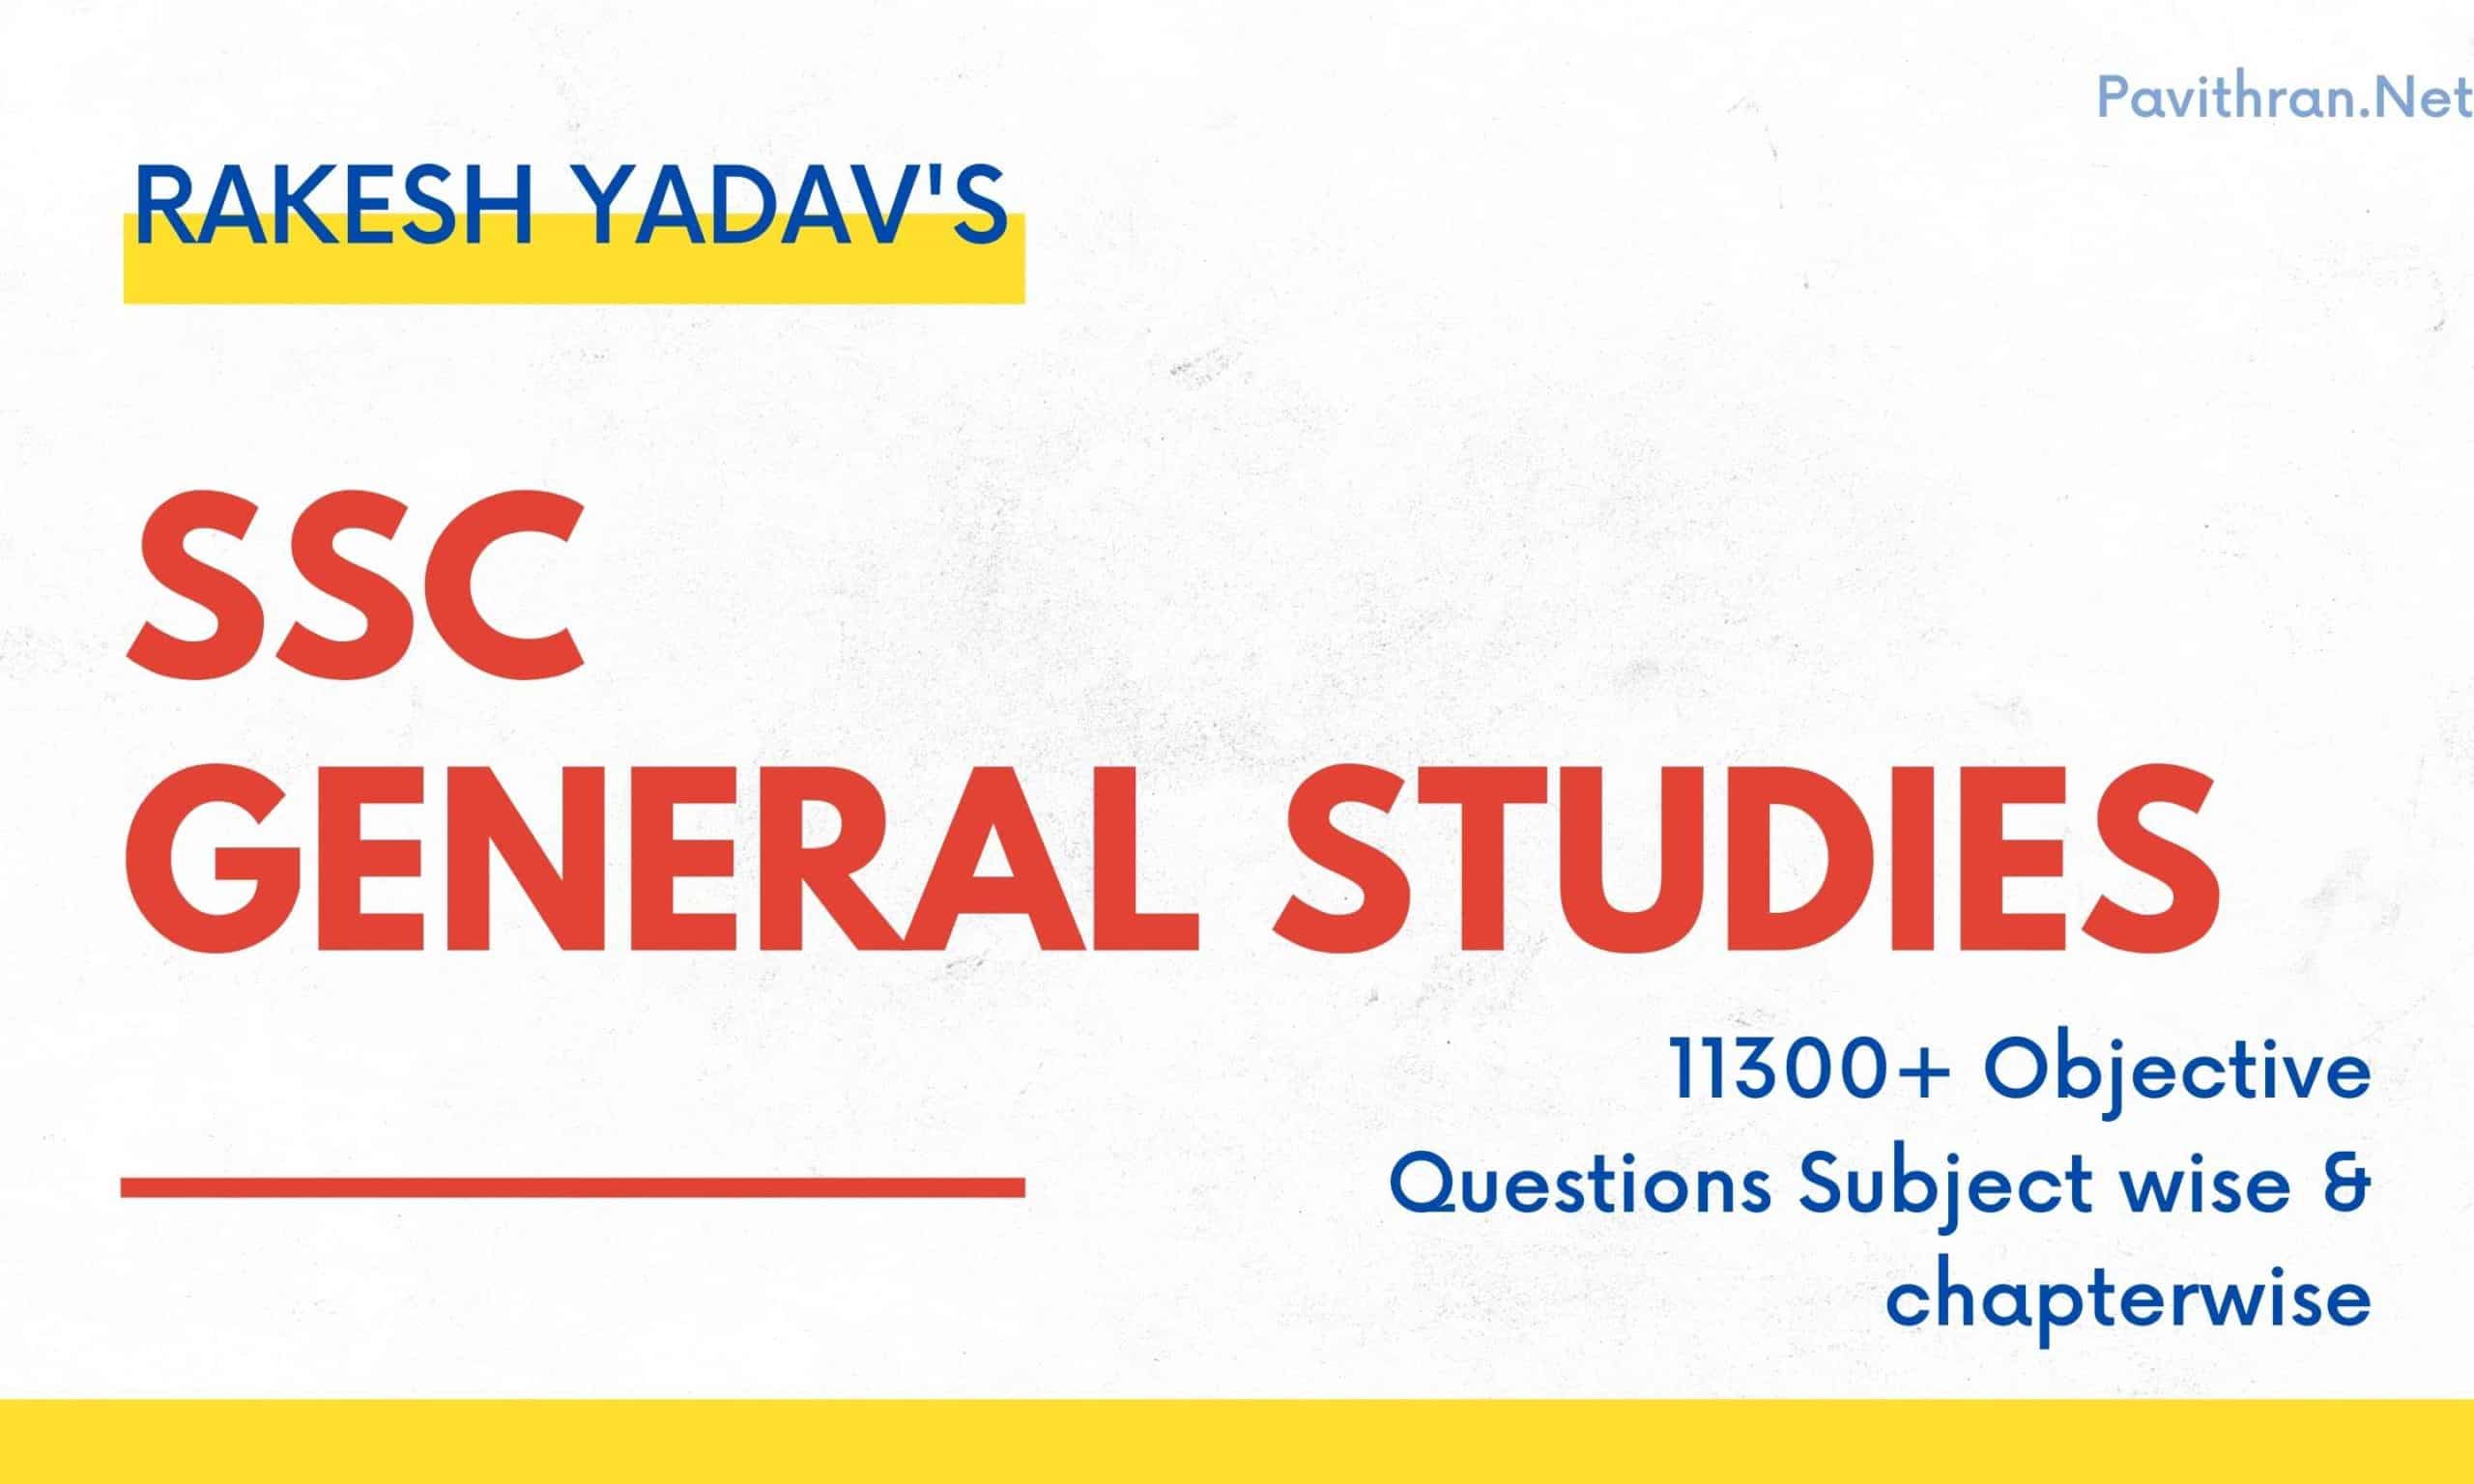 SSC General Studies by Rakesh Yadav PDF Download